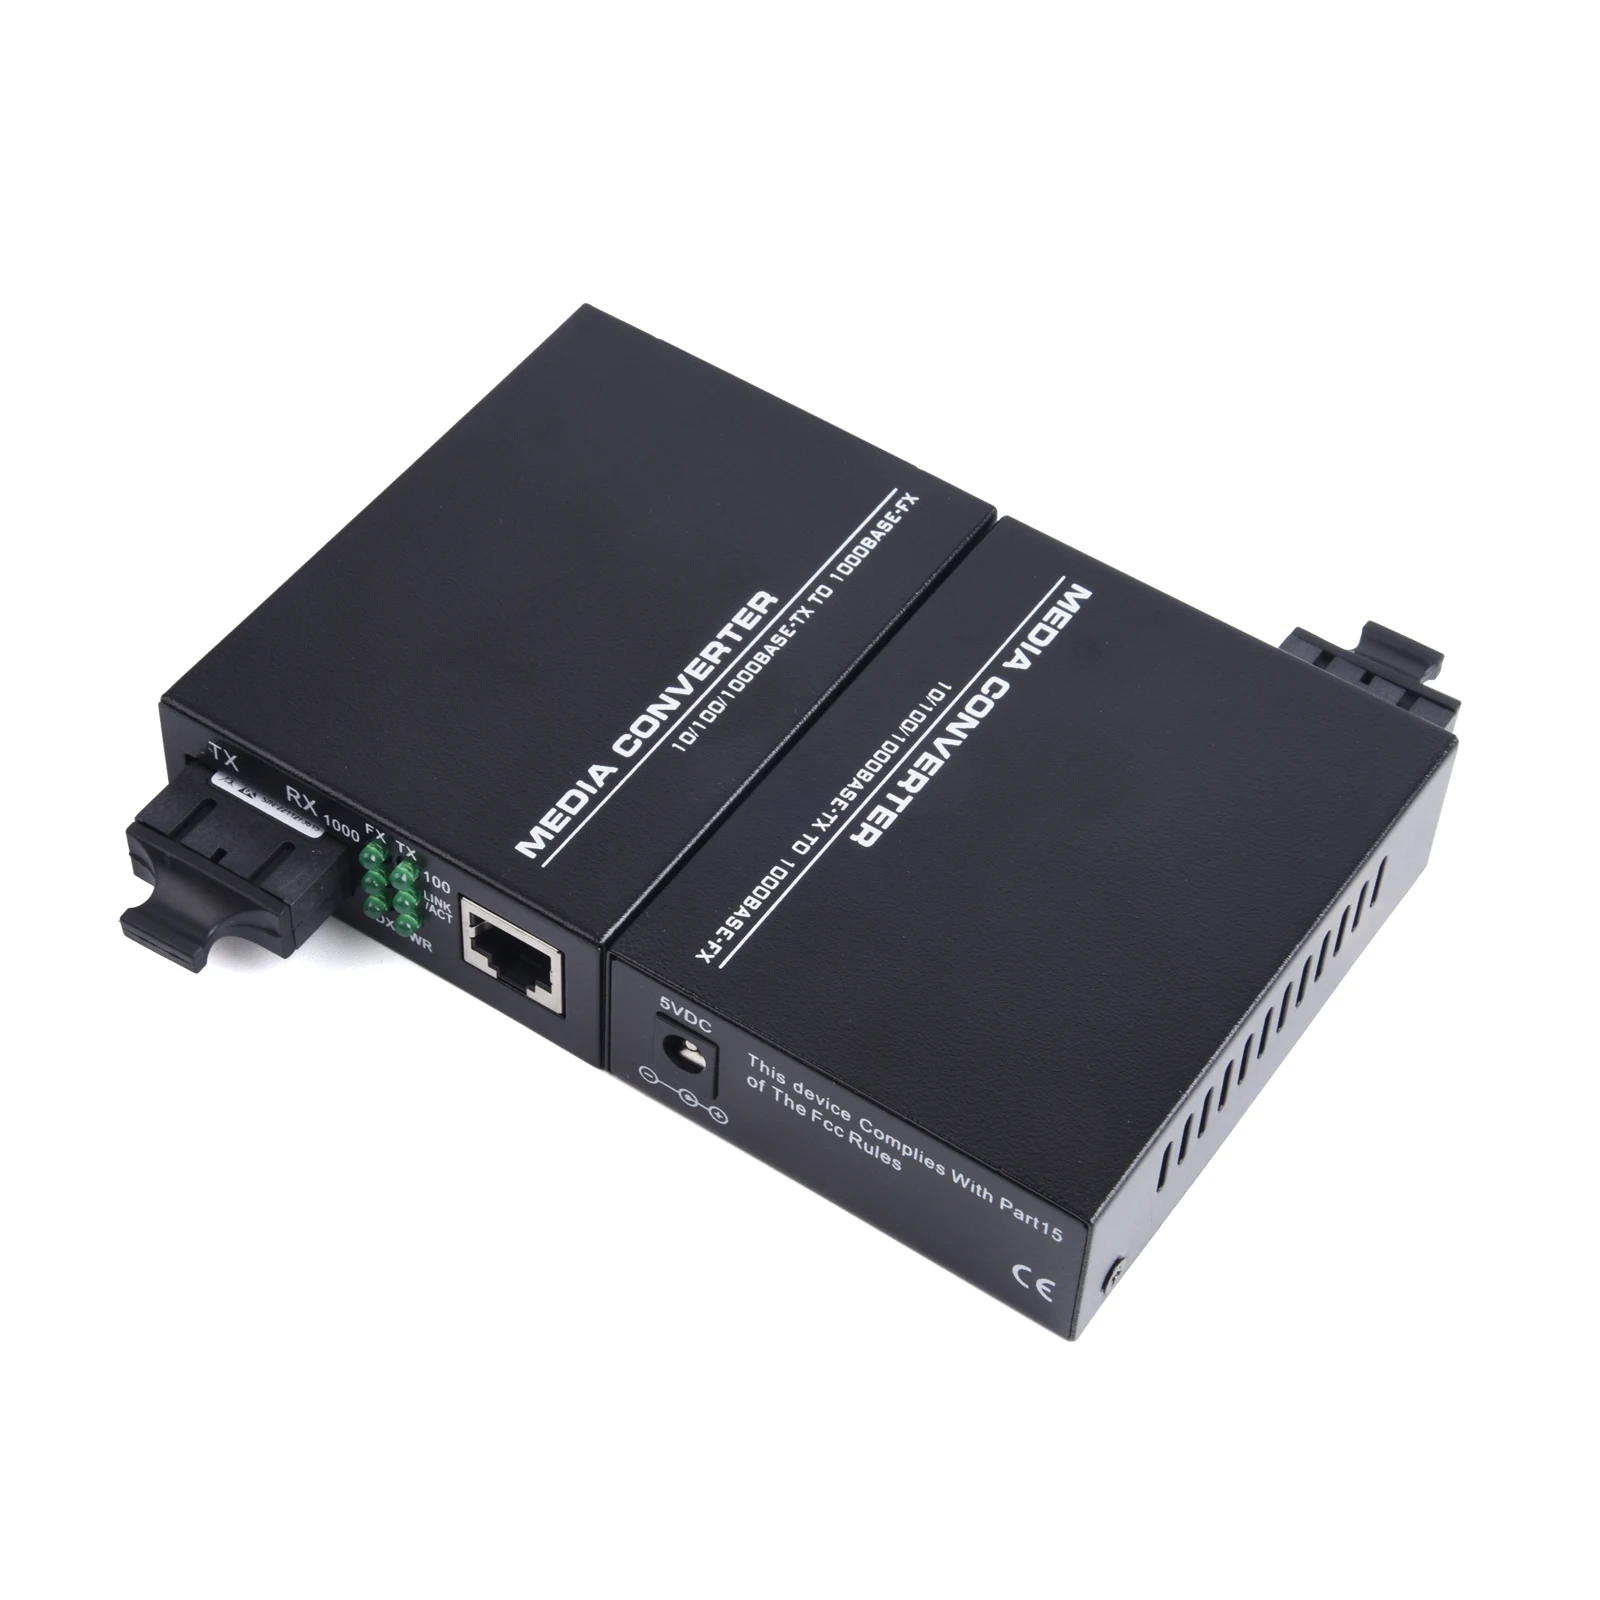 1Pair Gigabit Fiber Optical Media Converter Switch 1000M Single Mode Multimode UPC/APC 2 SC-Port to 1 RJ45 Fiber Transceiver Kit